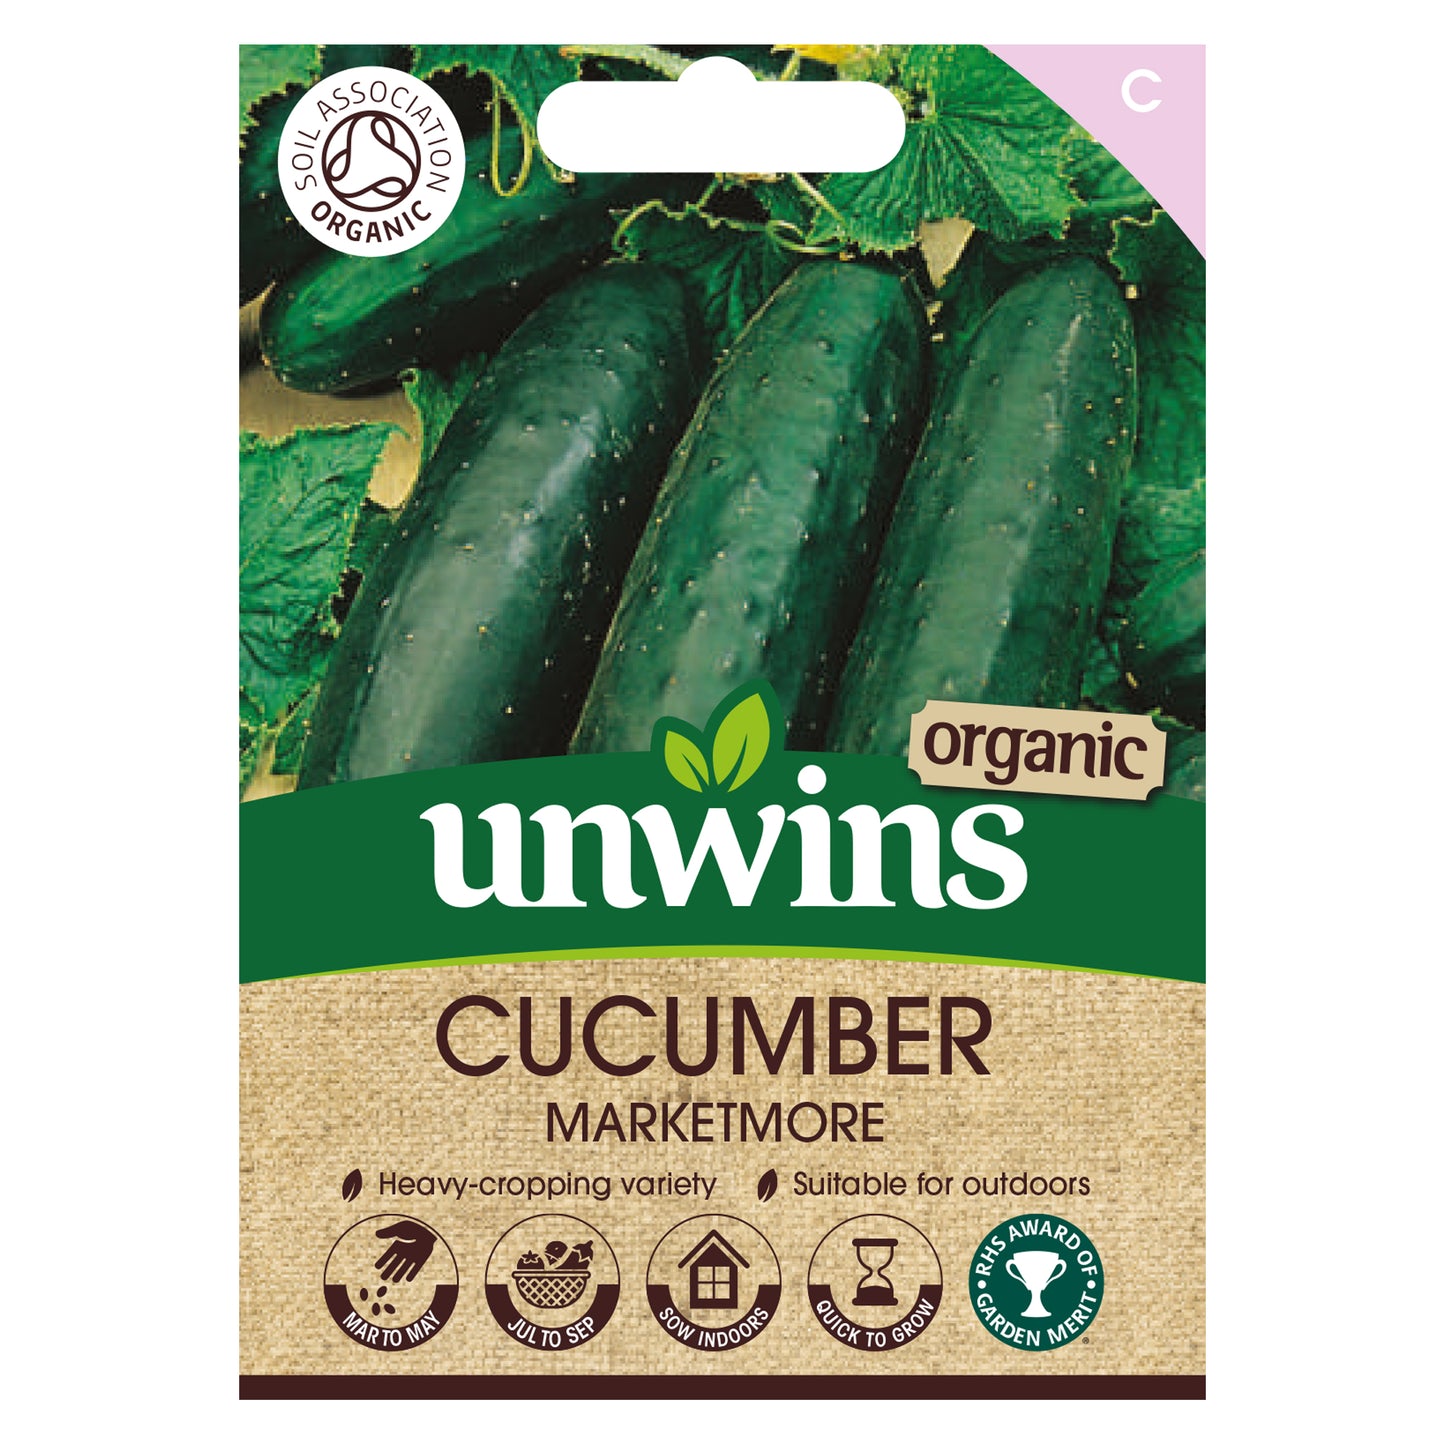 Unwins Organic Cucumber Marketmore Seeds front